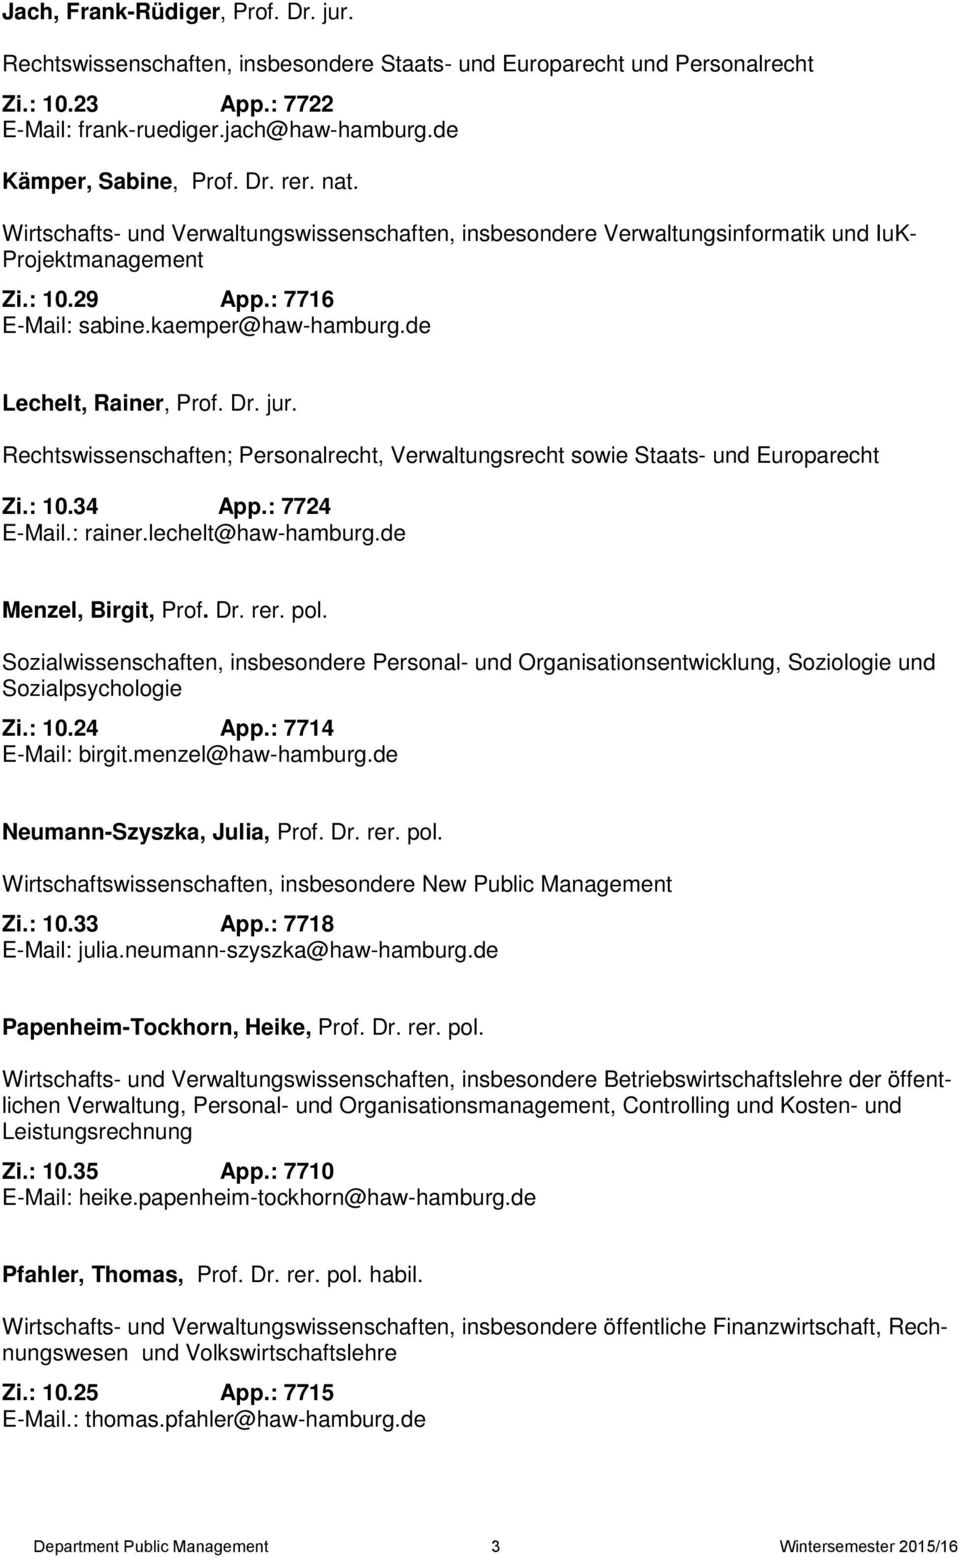 de Lechelt, Rainer, Prof. Dr. jur. Rechtswissenschaften; Personalrecht, Verwaltungsrecht sowie Staats- und Europarecht Zi.: 10.34 App.: 7724 E-Mail.: rainer.lechelt@haw-hamburg.